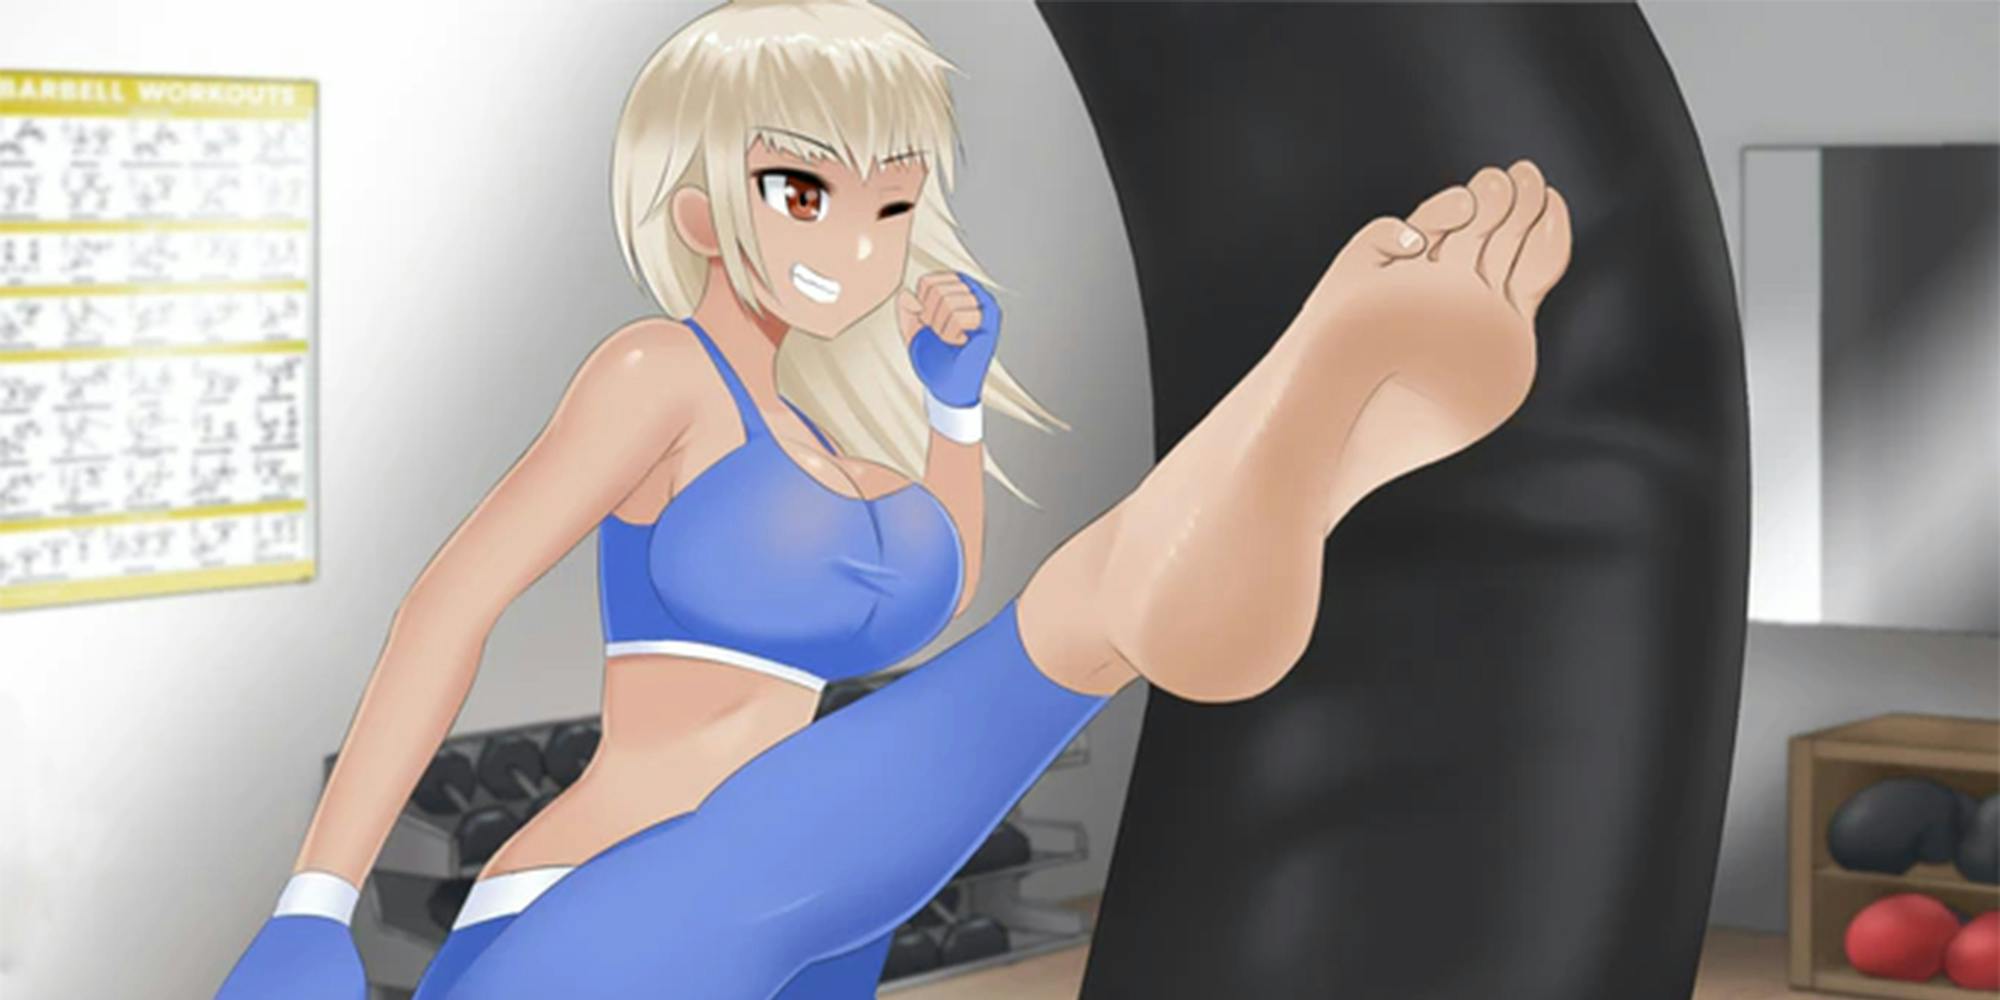 Gamer Anime Feet Porn - My Toes Story: Kickstarter Offers Foot Fetish Visual Novel